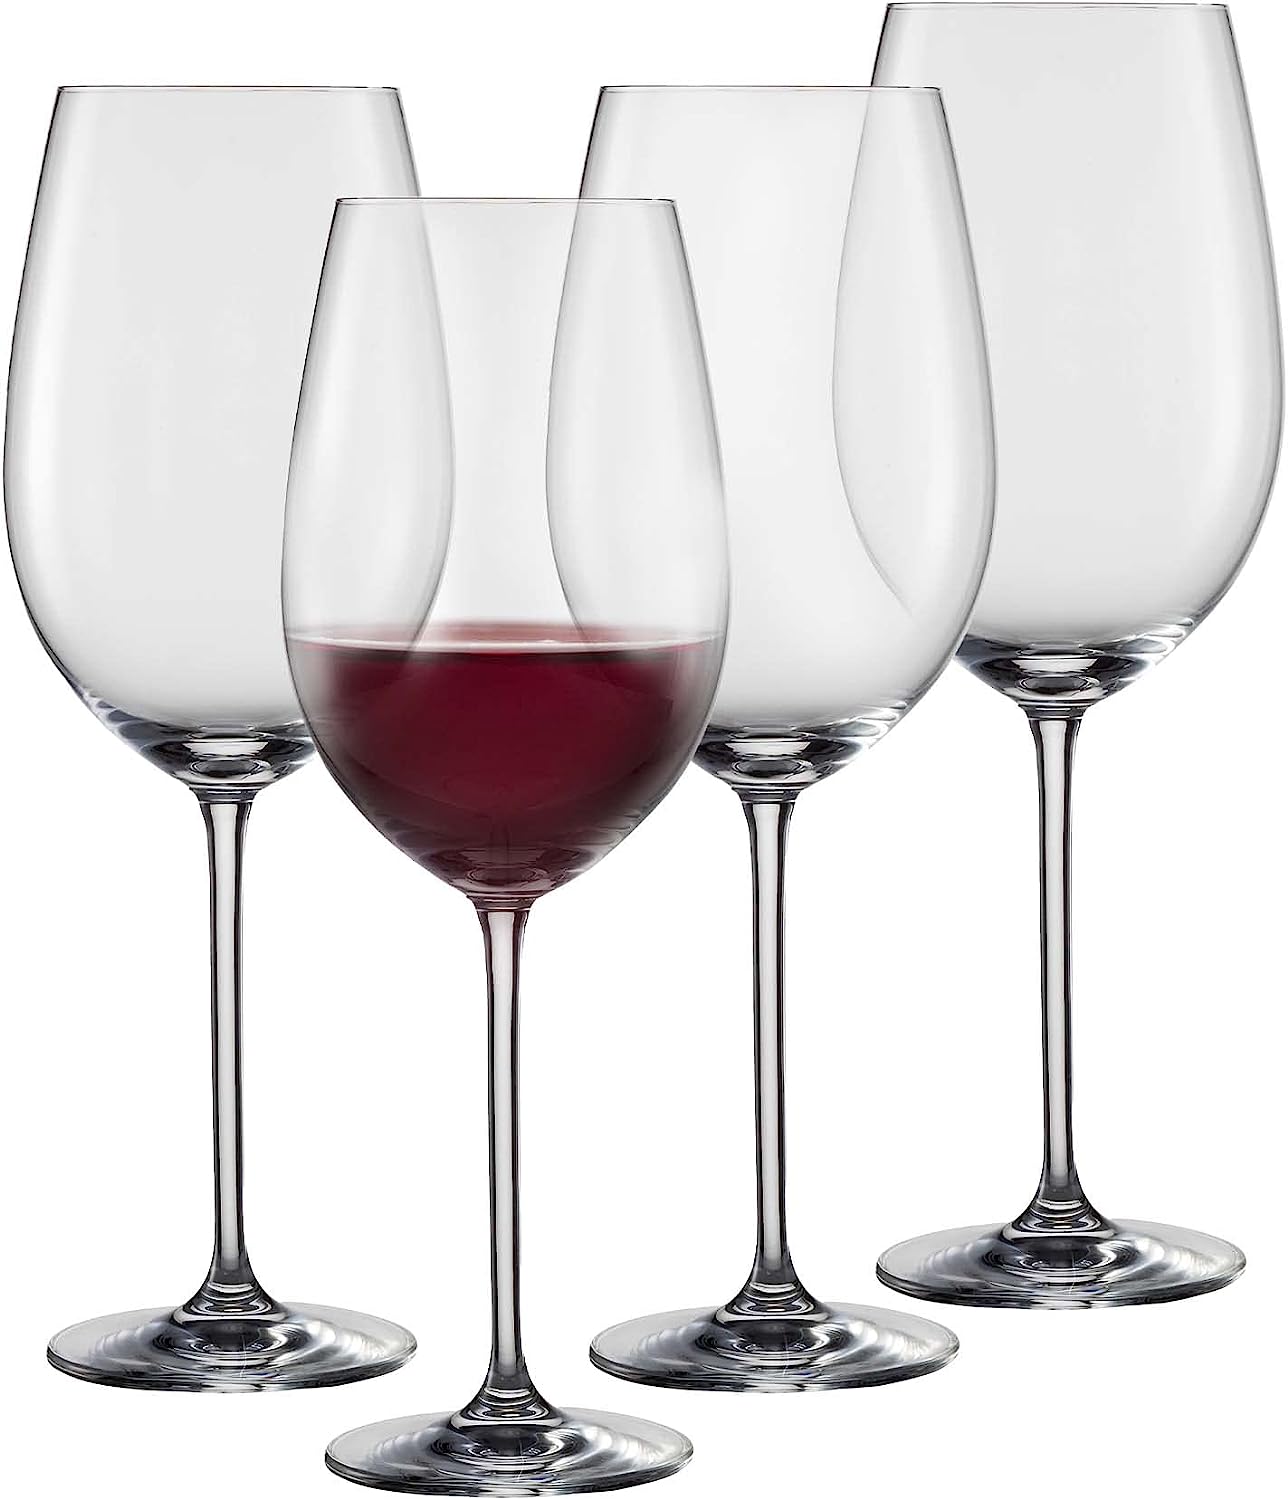 Schott Zwiesel Vinos Bordeaux Red Wine Glasses (Set of 4), Graceful Bordeaux Glasses for Red Wine, Dishwasher-Safe Tritan Crystal Glasses, Made in Germany (Item No. 130009)